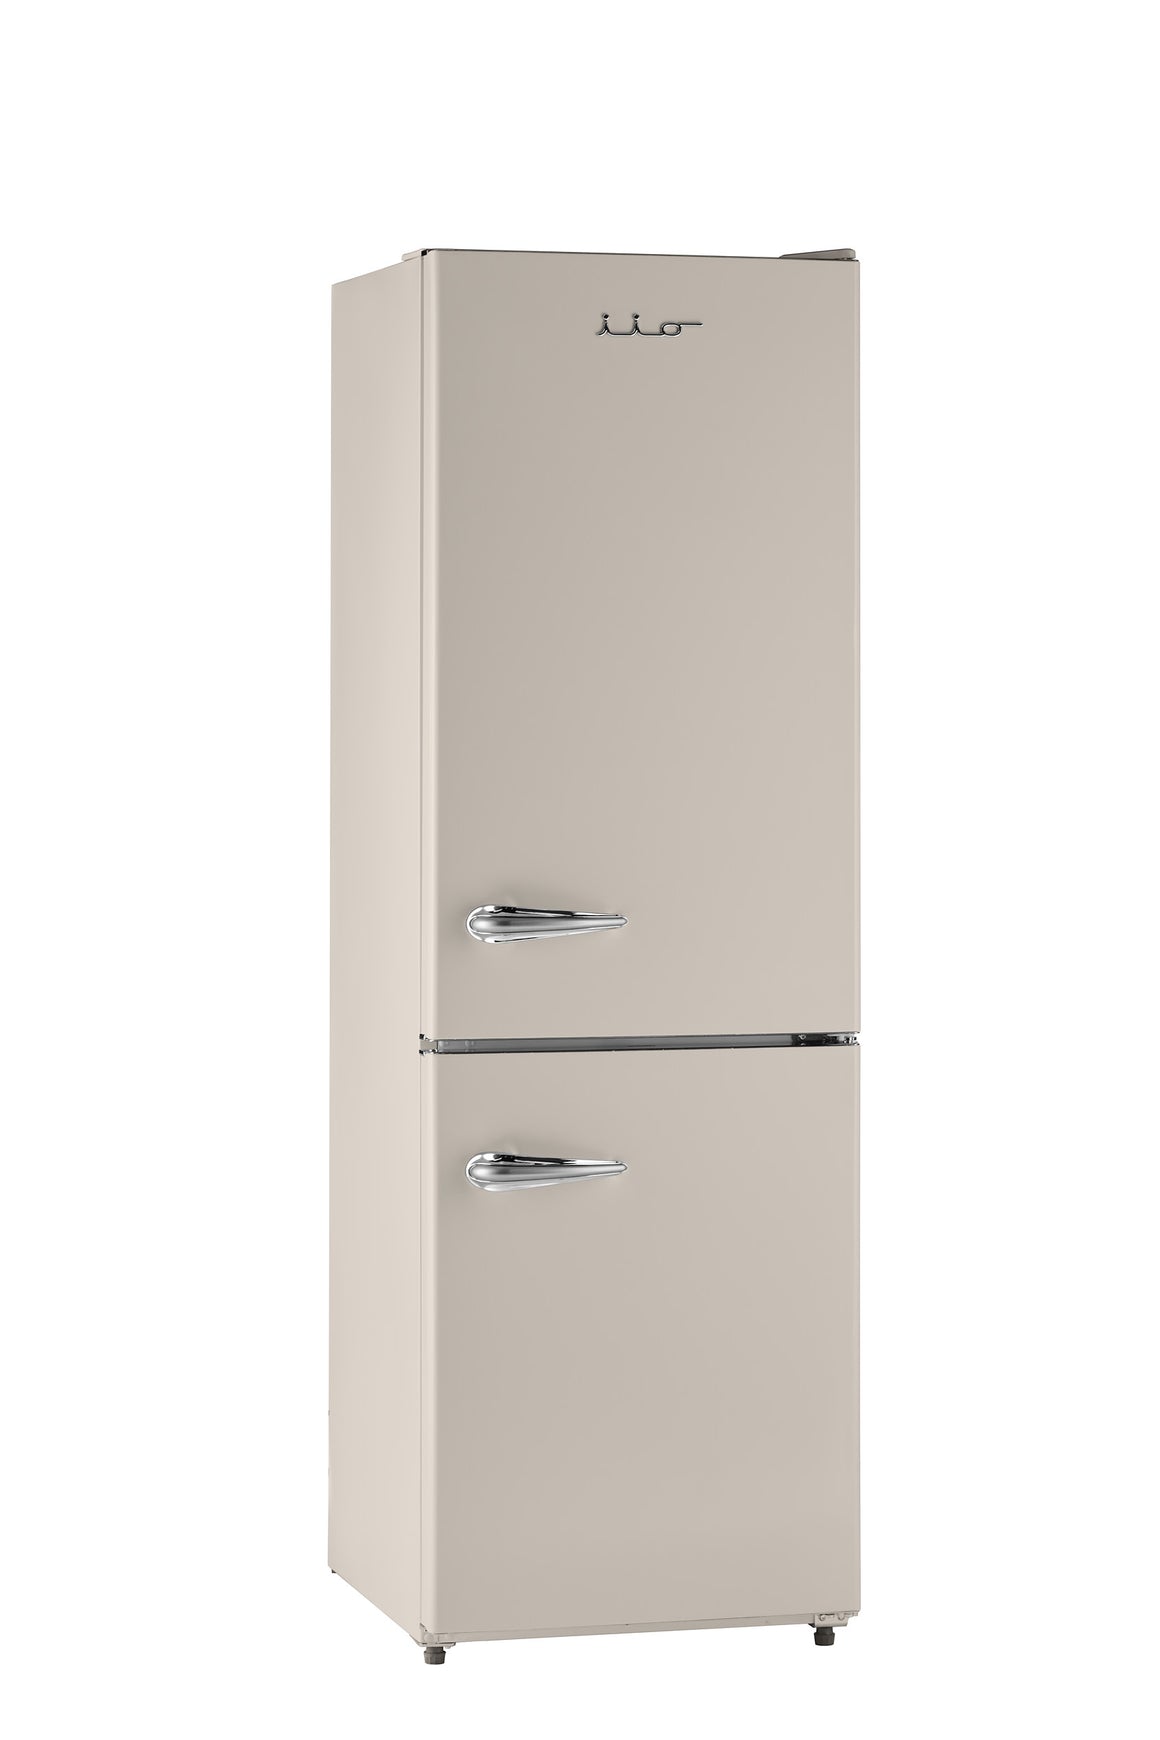 iio 11 Cu. Ft. Retro Refrigerator with Bottom Freezer in Cream (Right Hinge)